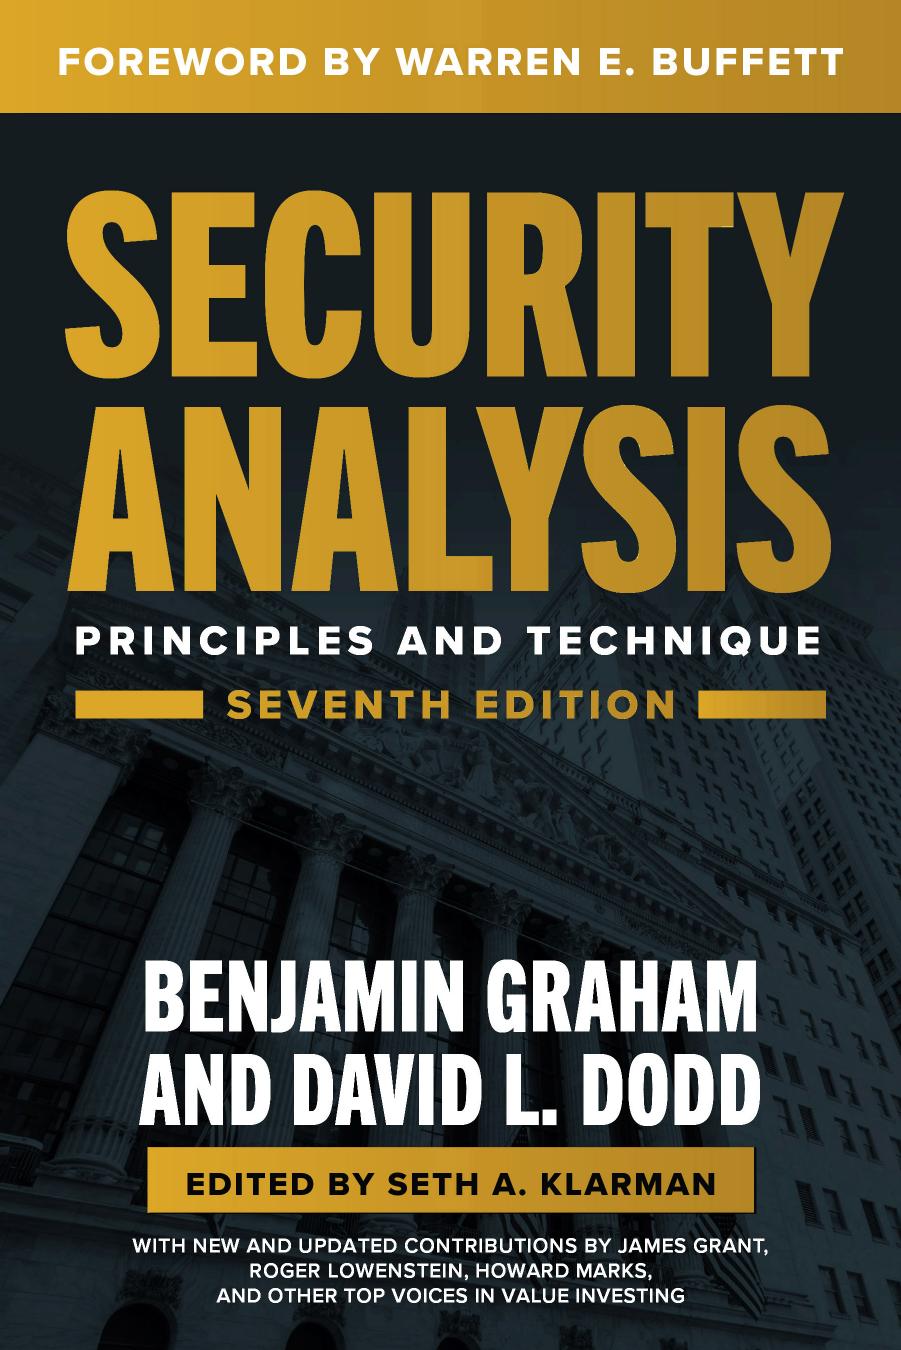 Security Analysis, Seventh Edition: Principles and Techniques by Benjamin Graham David Dodd Seth A. Klarman